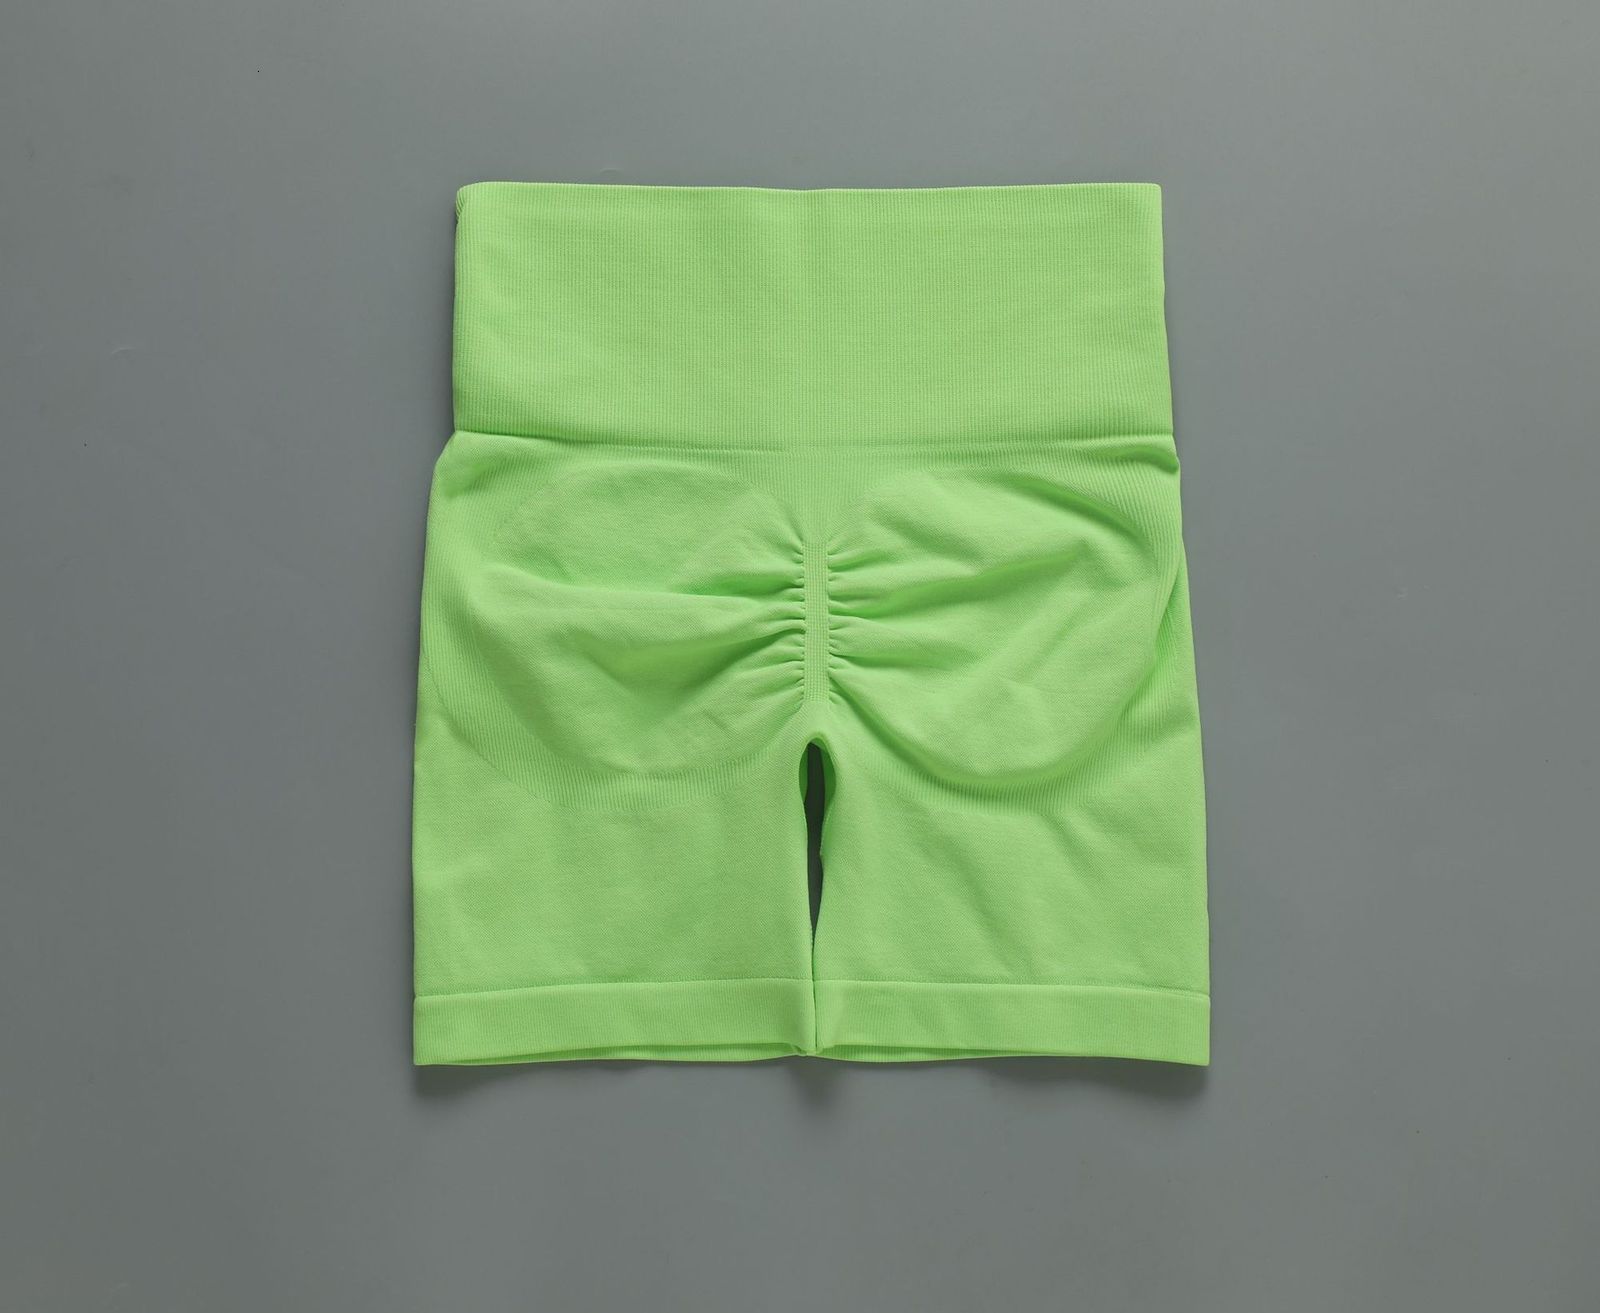 shorts green